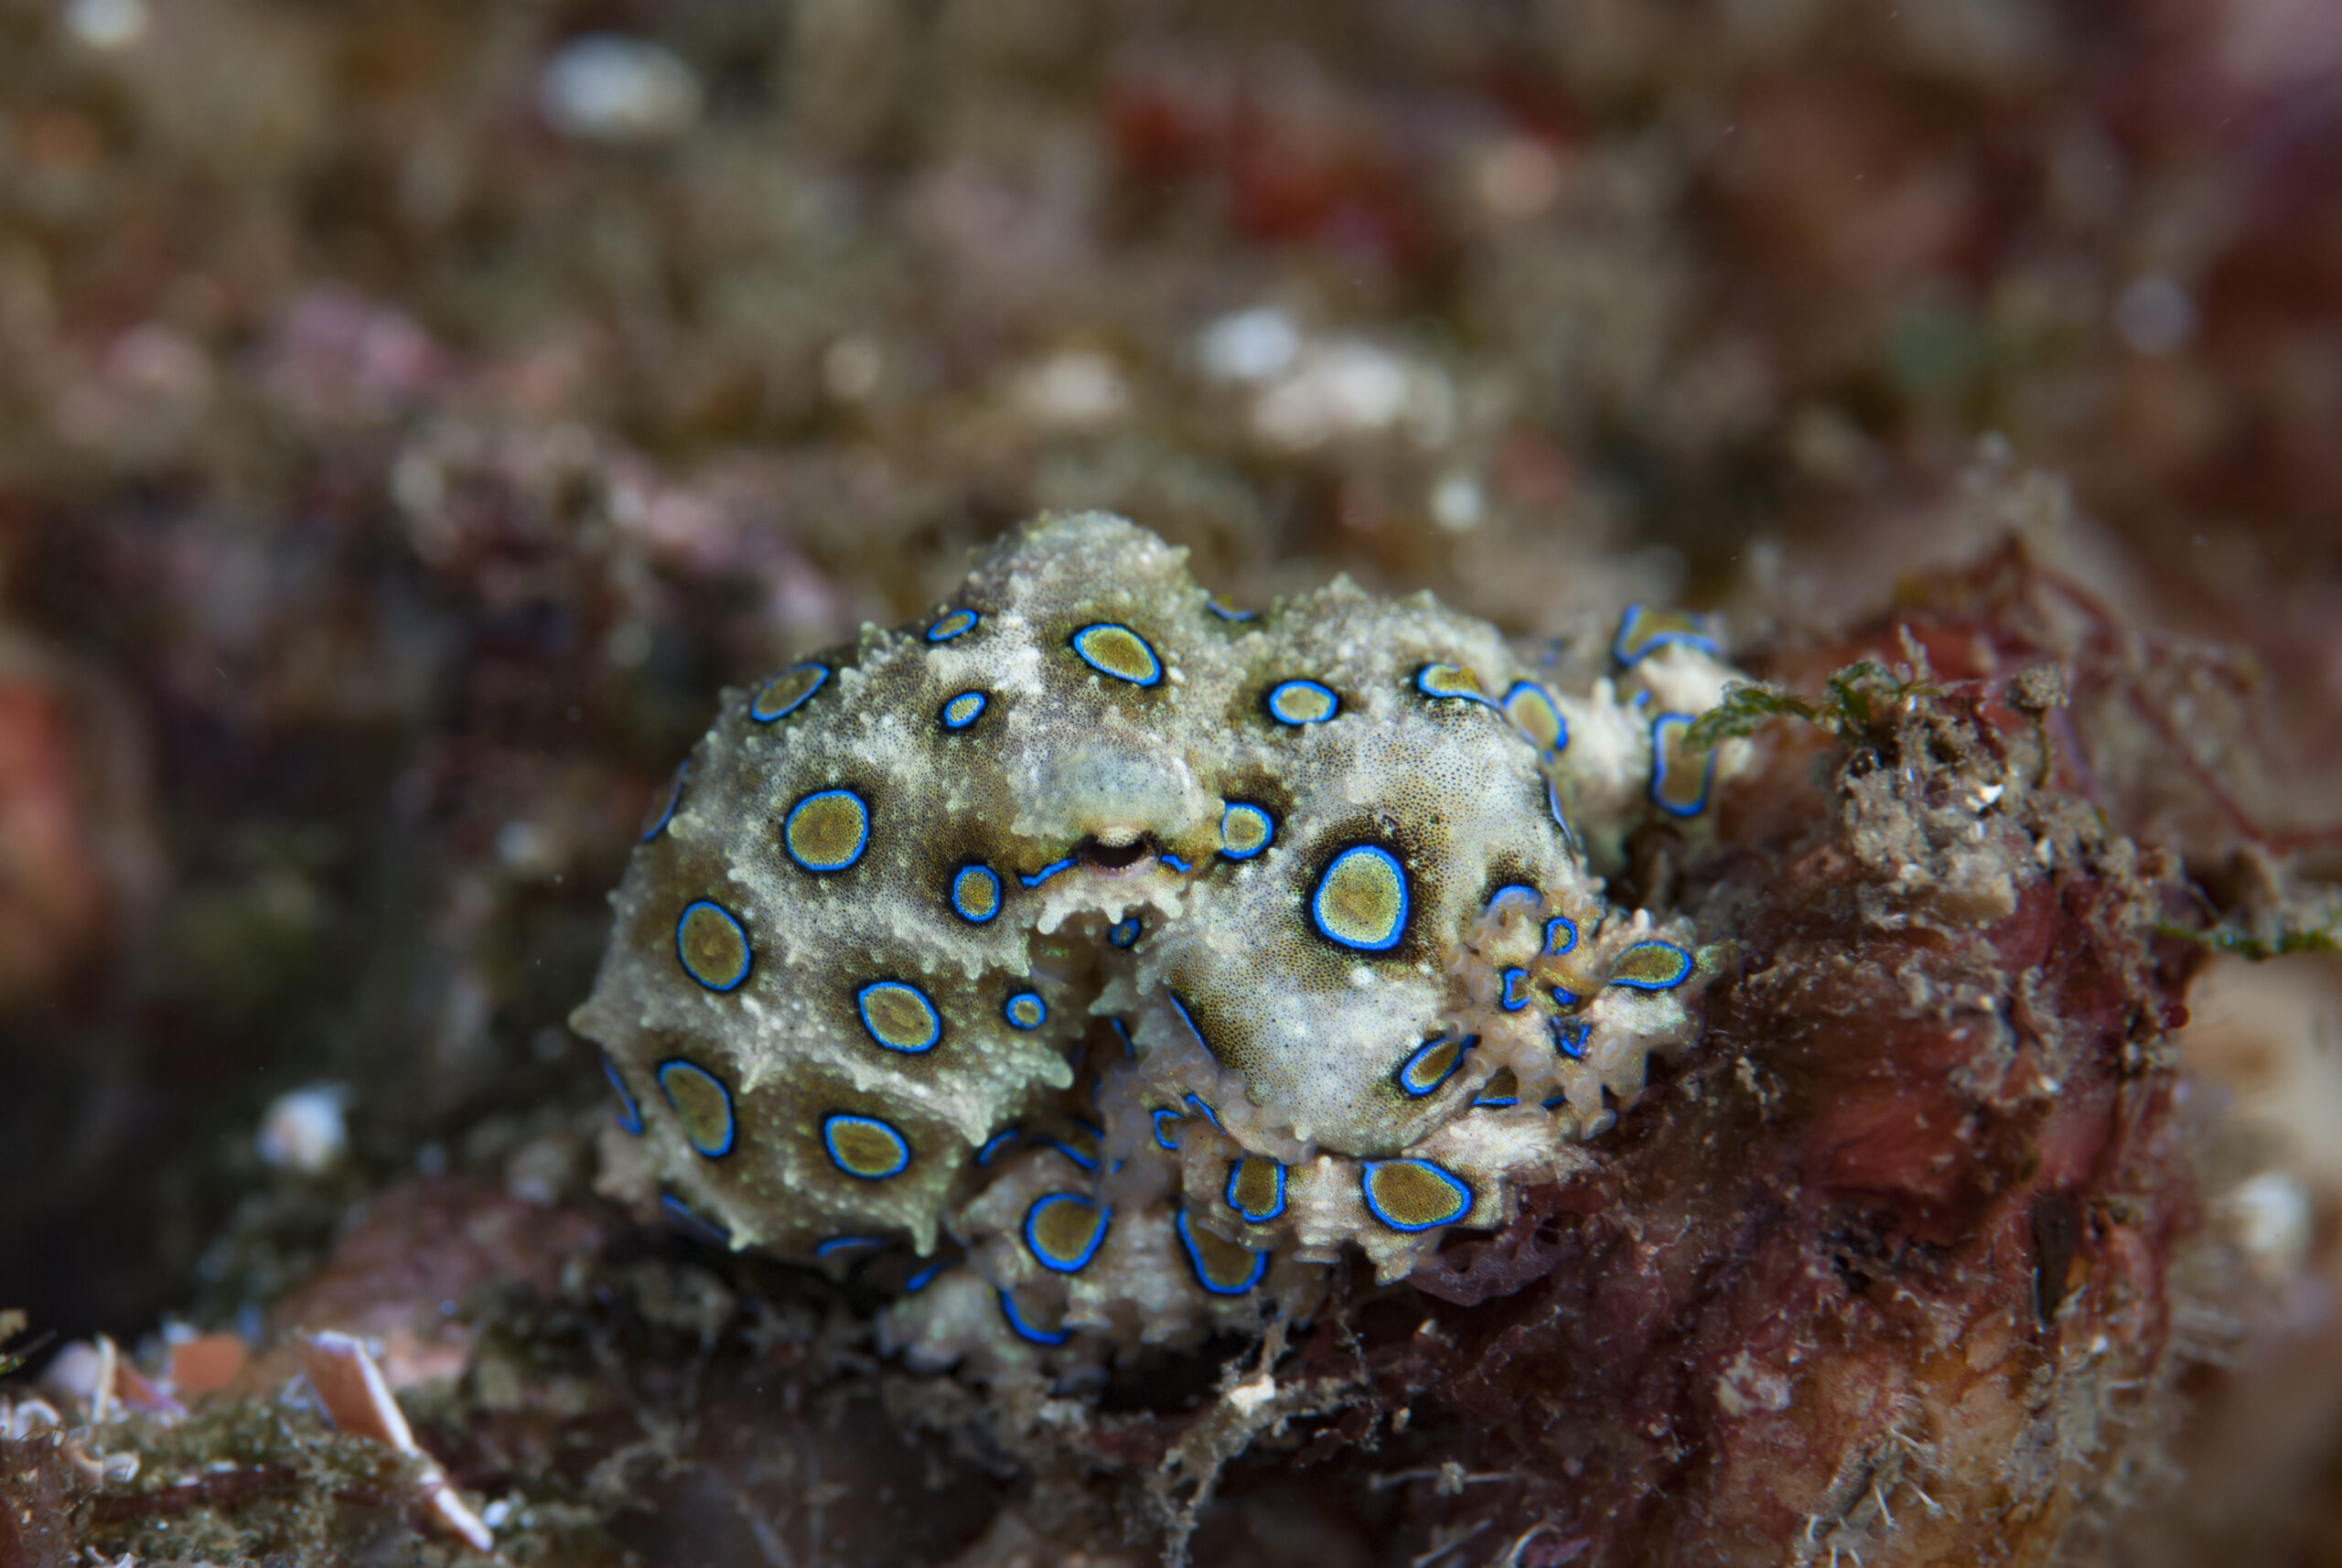 Blue-ringed octopus Hapalochlaena lunulata